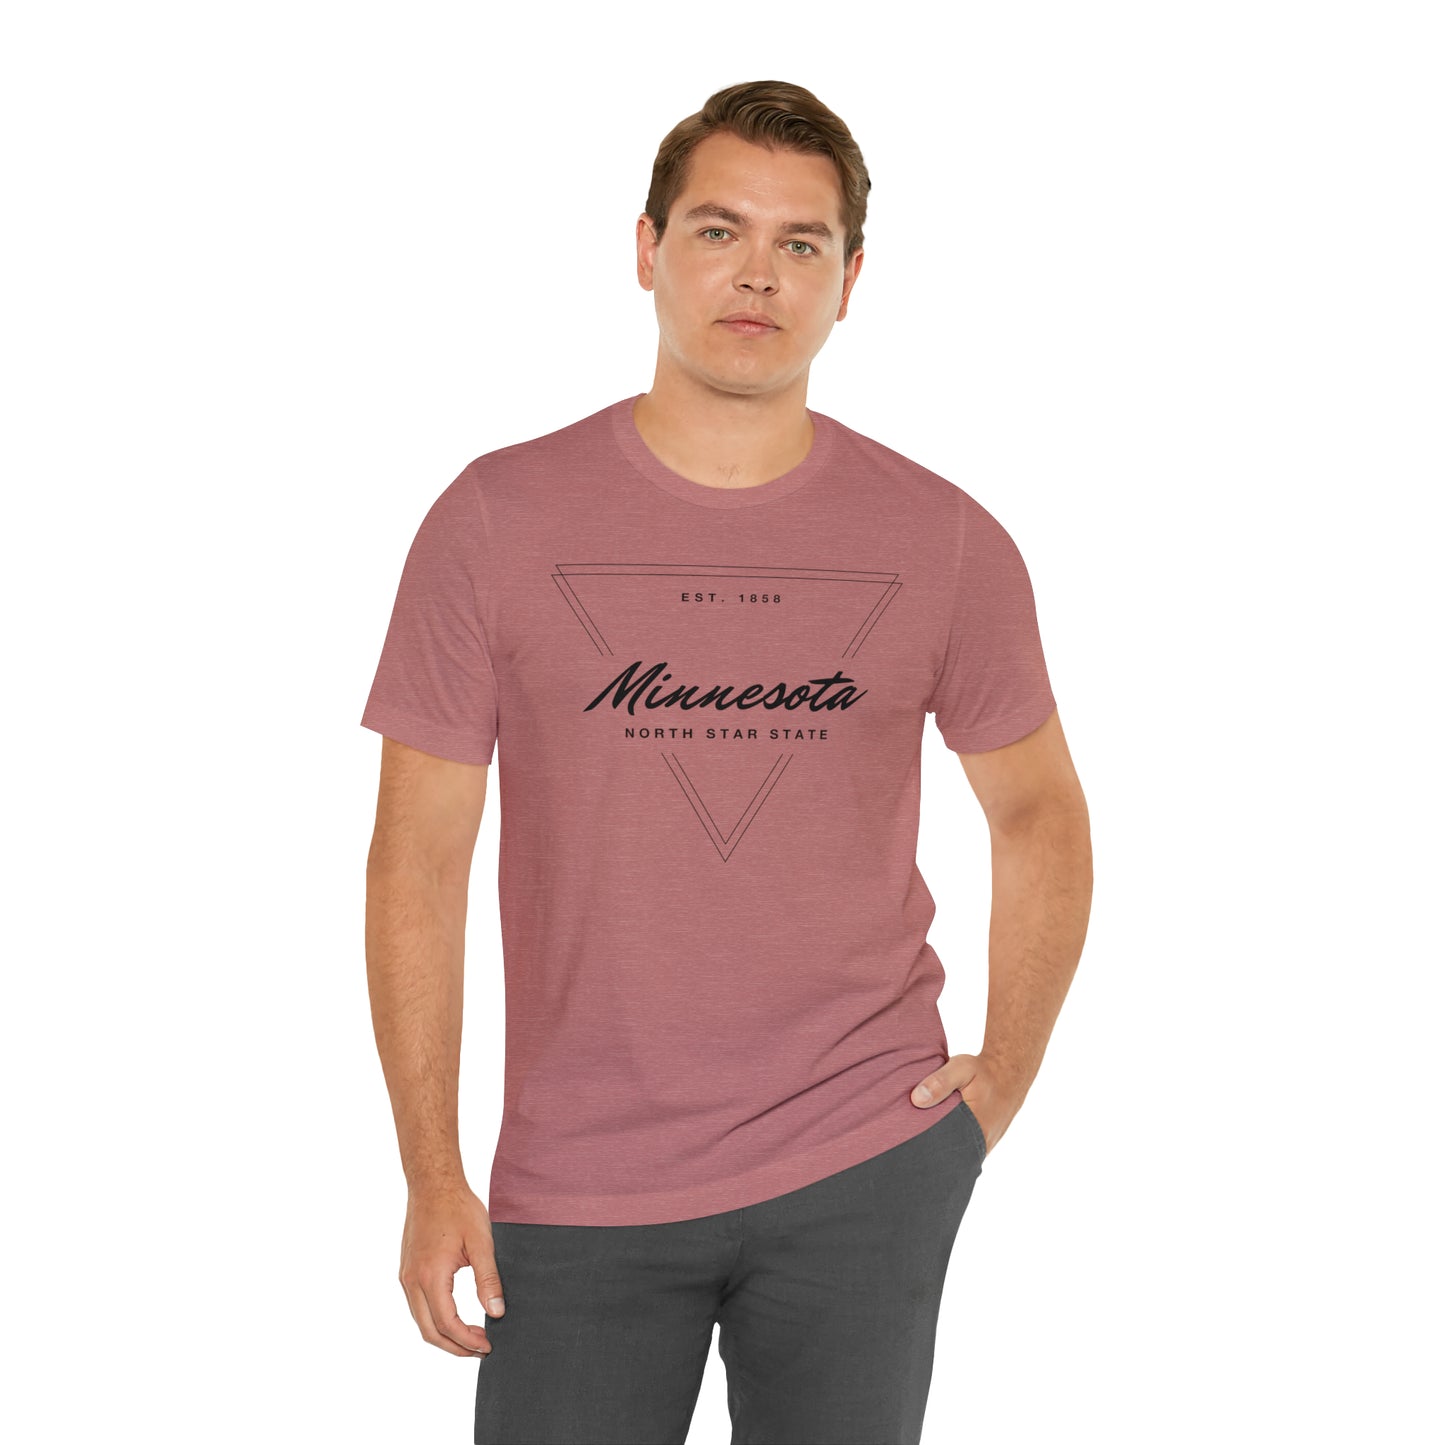 Minnesota Geometric Shirt